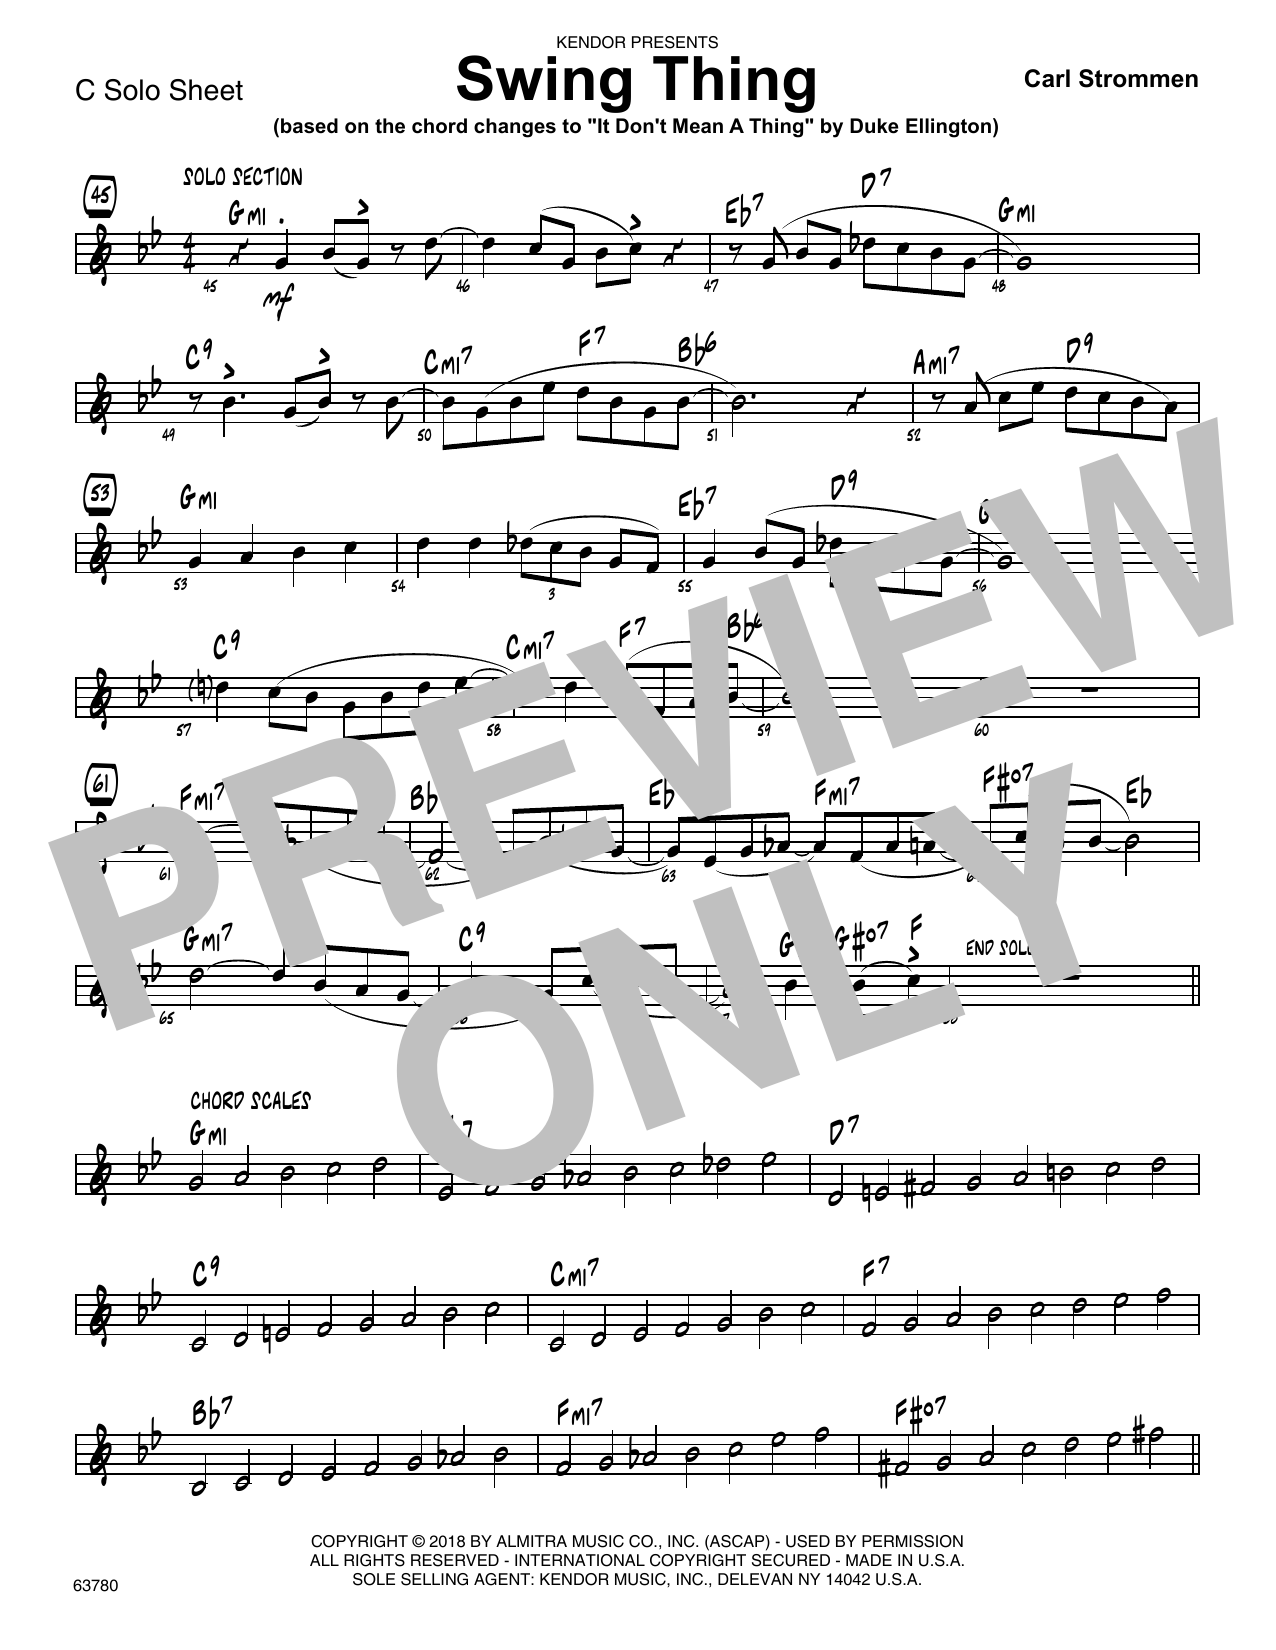 Download Carl Strommen Swing Thing - C Solo Sheet Sheet Music